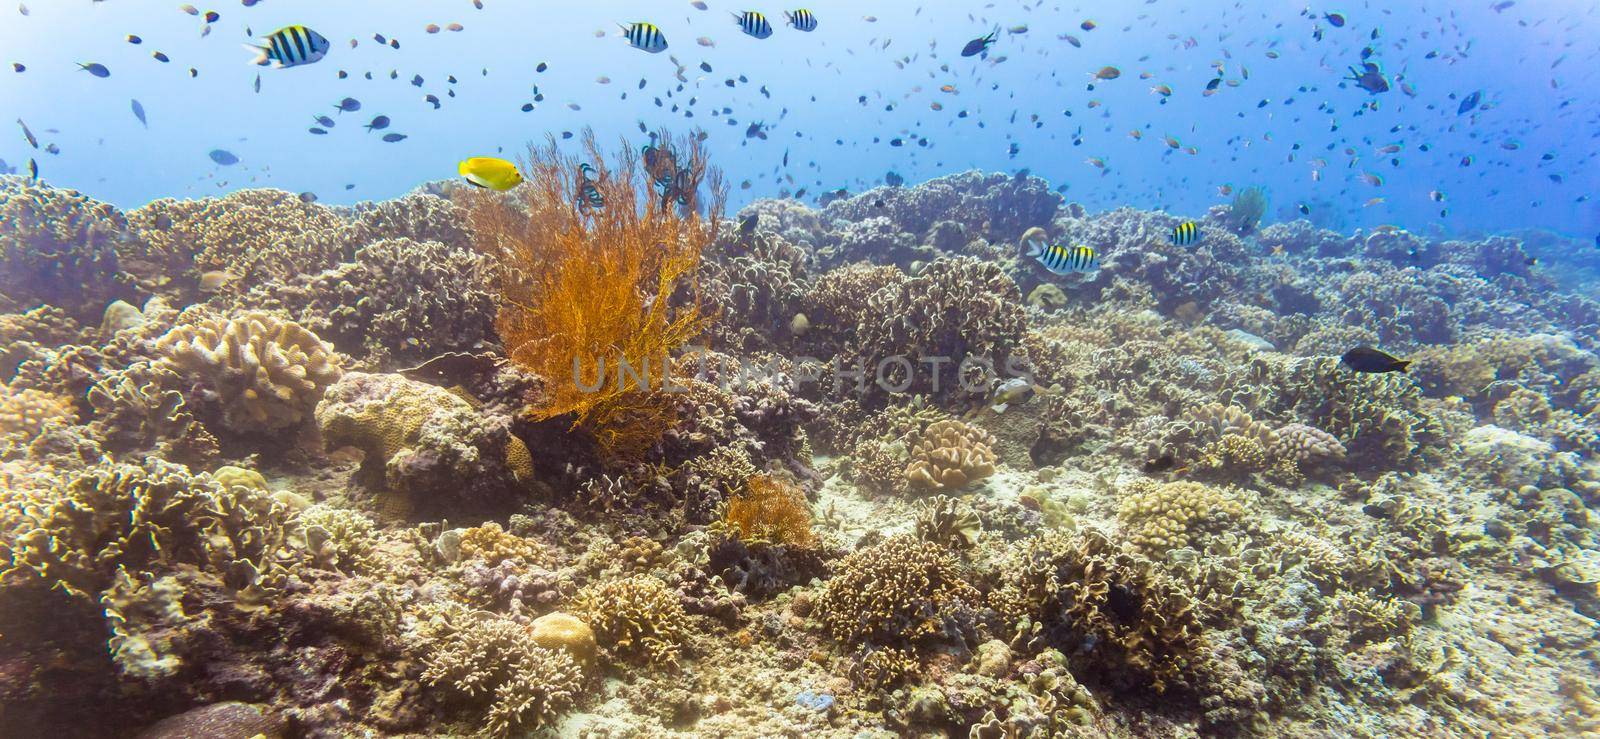 Coral reef and fish in tropical sea or ocean underwater